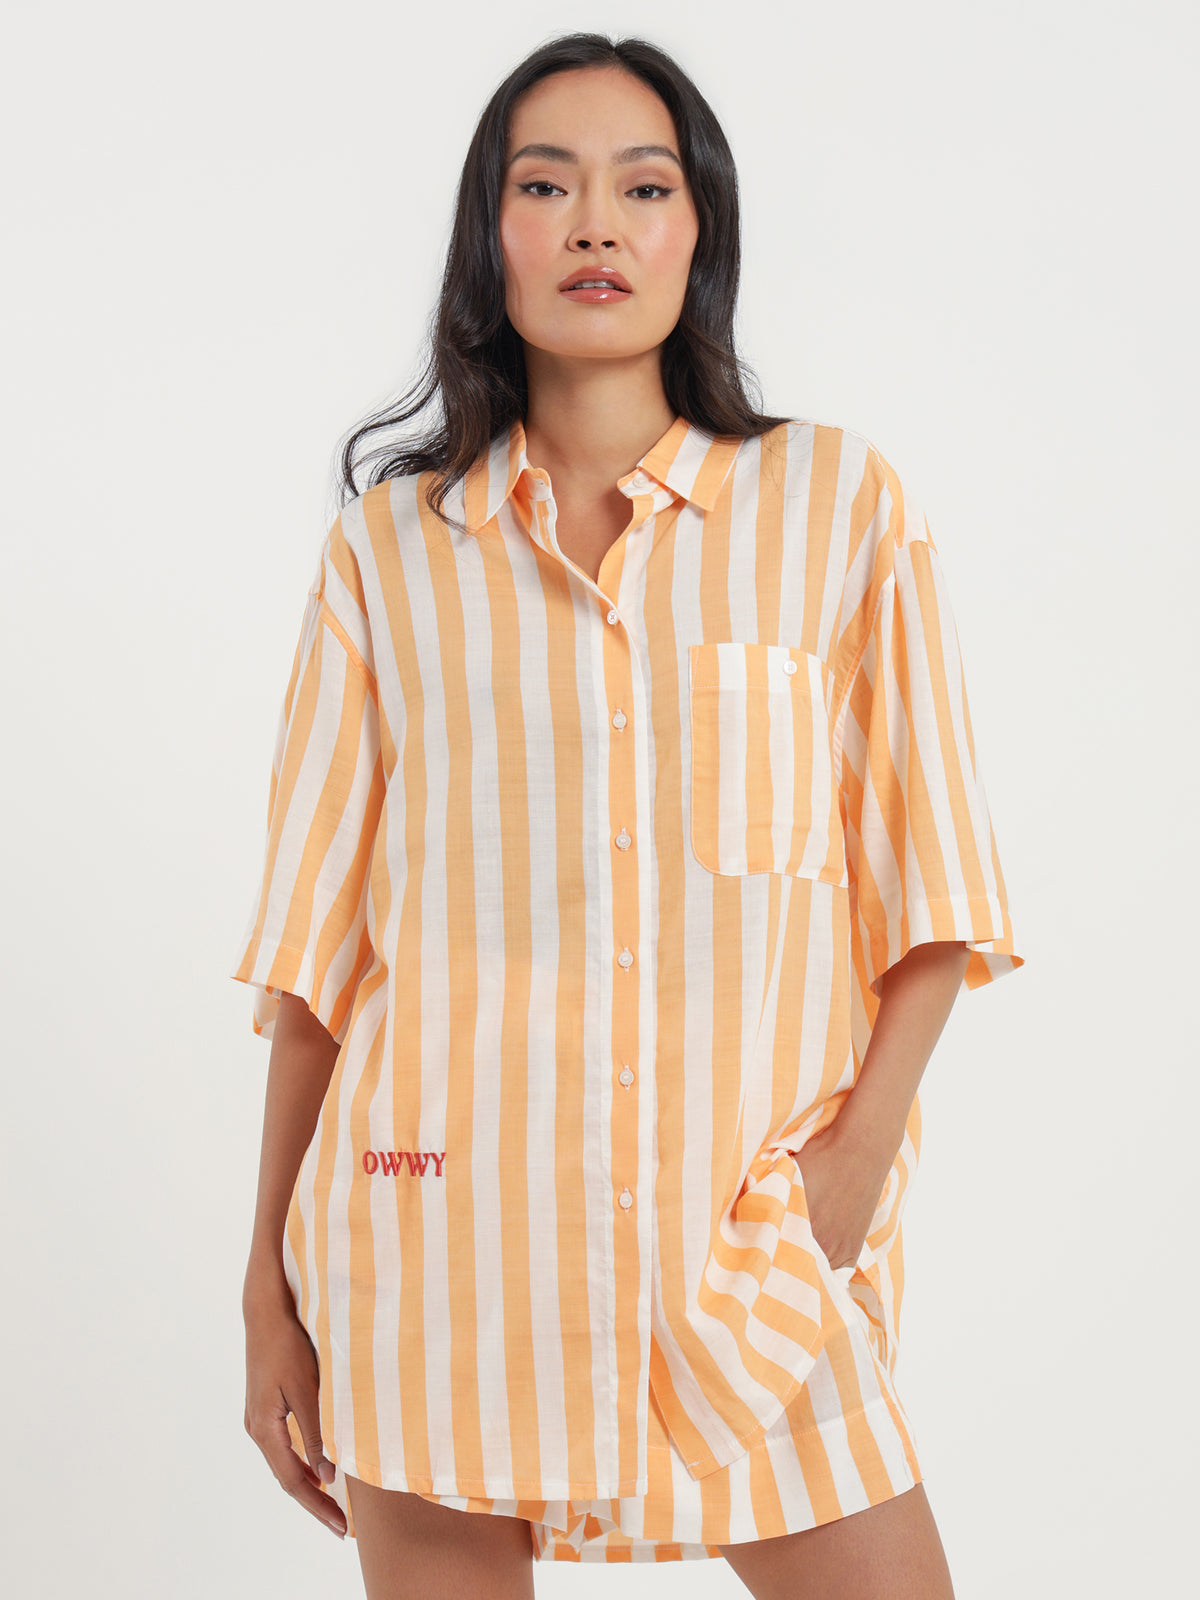 Sundae Beach Shirt in Orange Tangelo Stripe